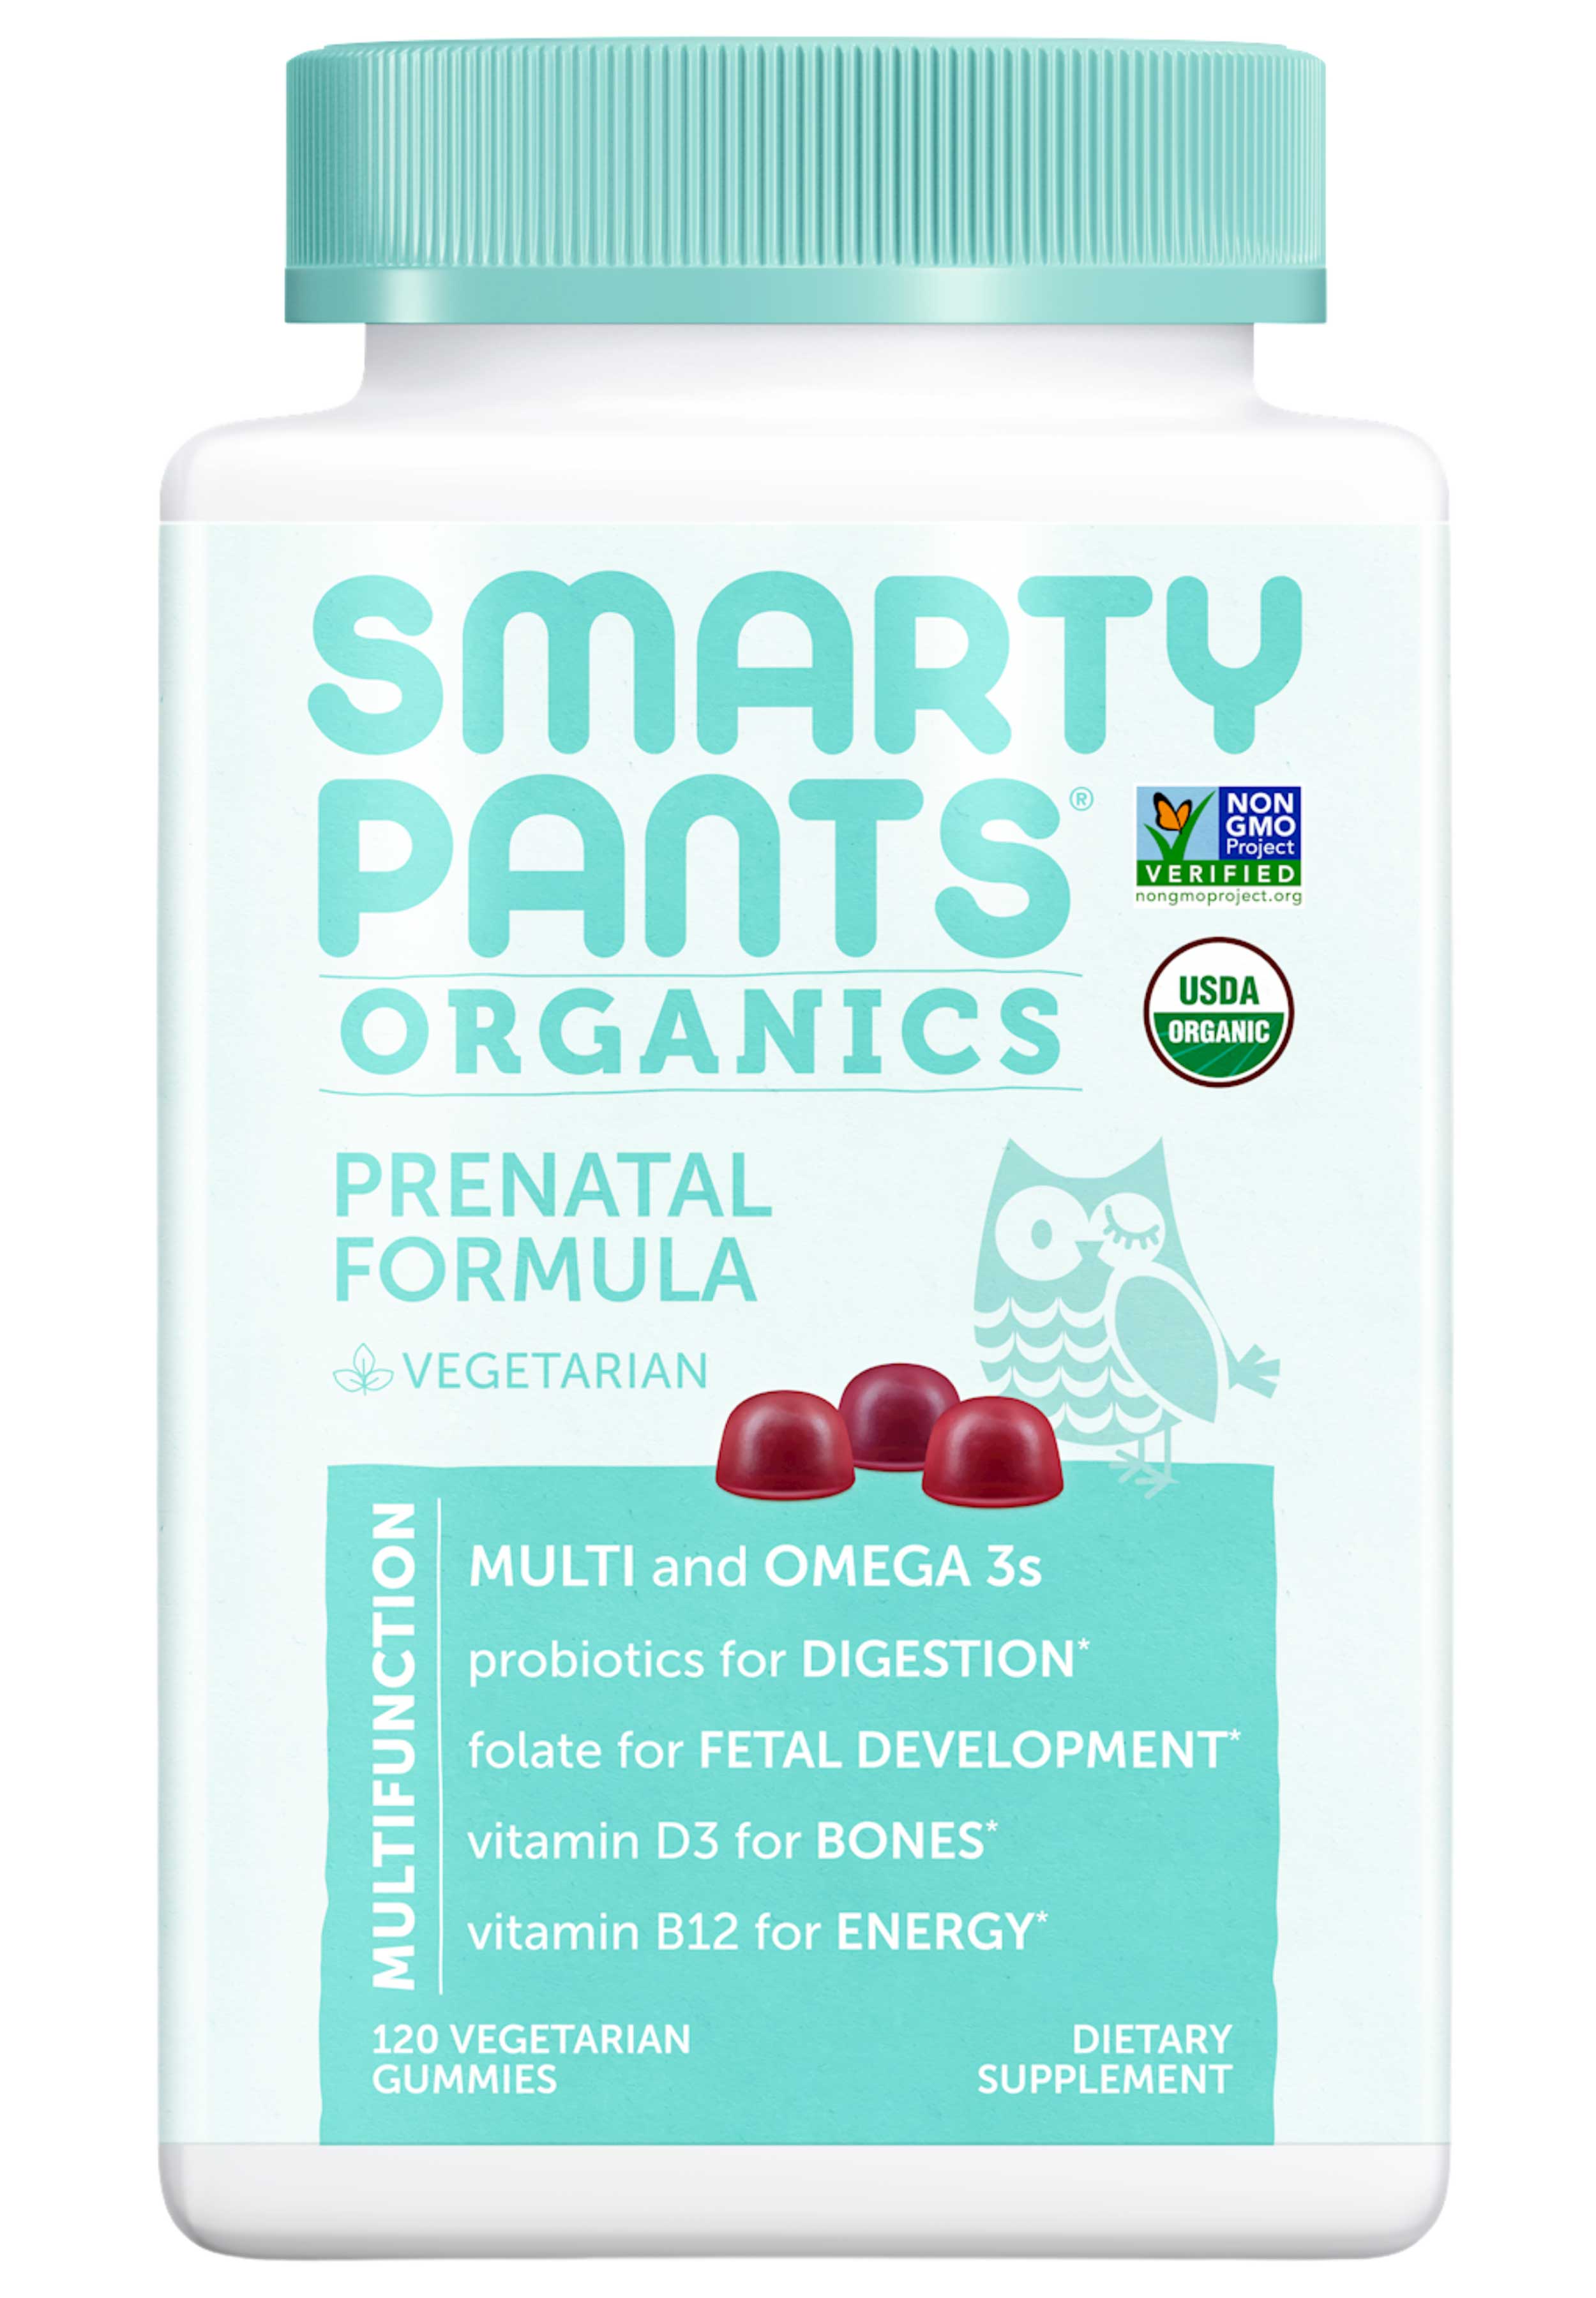 SmartyPants Prenatal Organic Formula